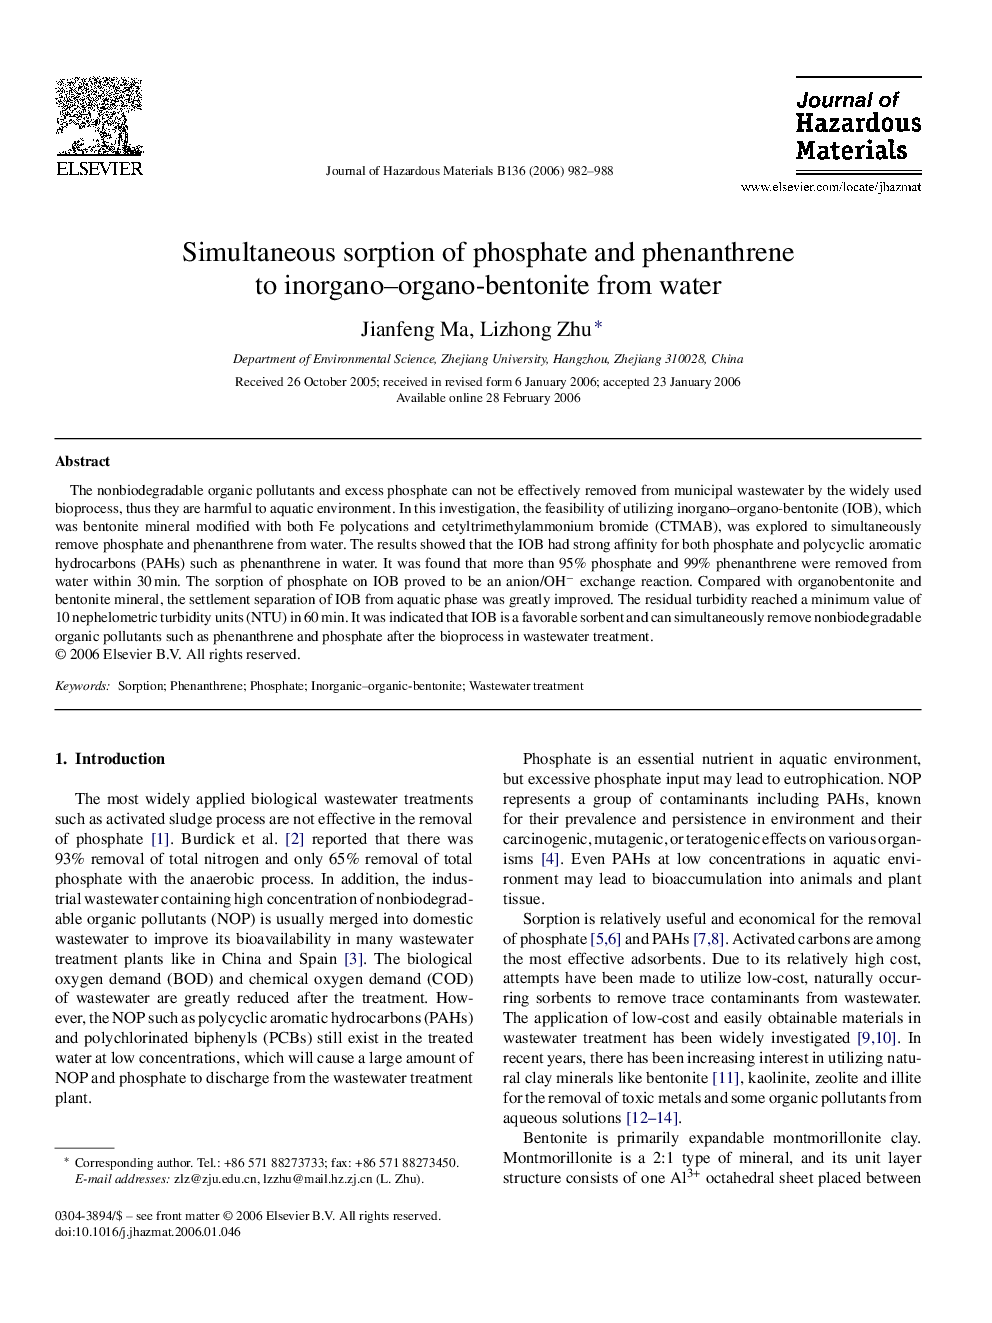 Simultaneous sorption of phosphate and phenanthrene to inorgano–organo-bentonite from water